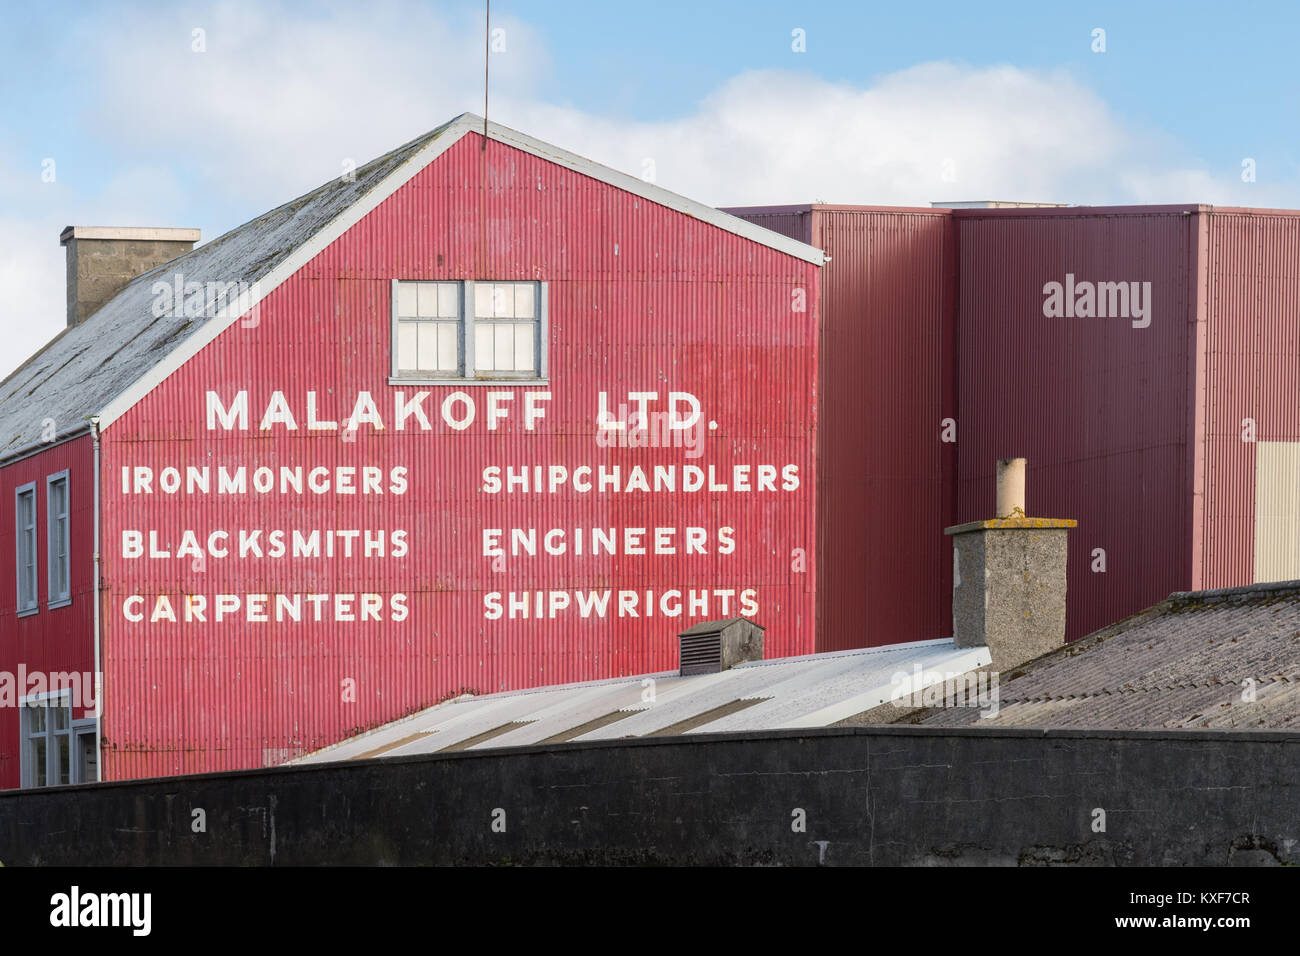 Malakoff Ltd - fabrication and engineering contractor, Lerwick, Shetland Islands, Scotland, UK Stock Photo